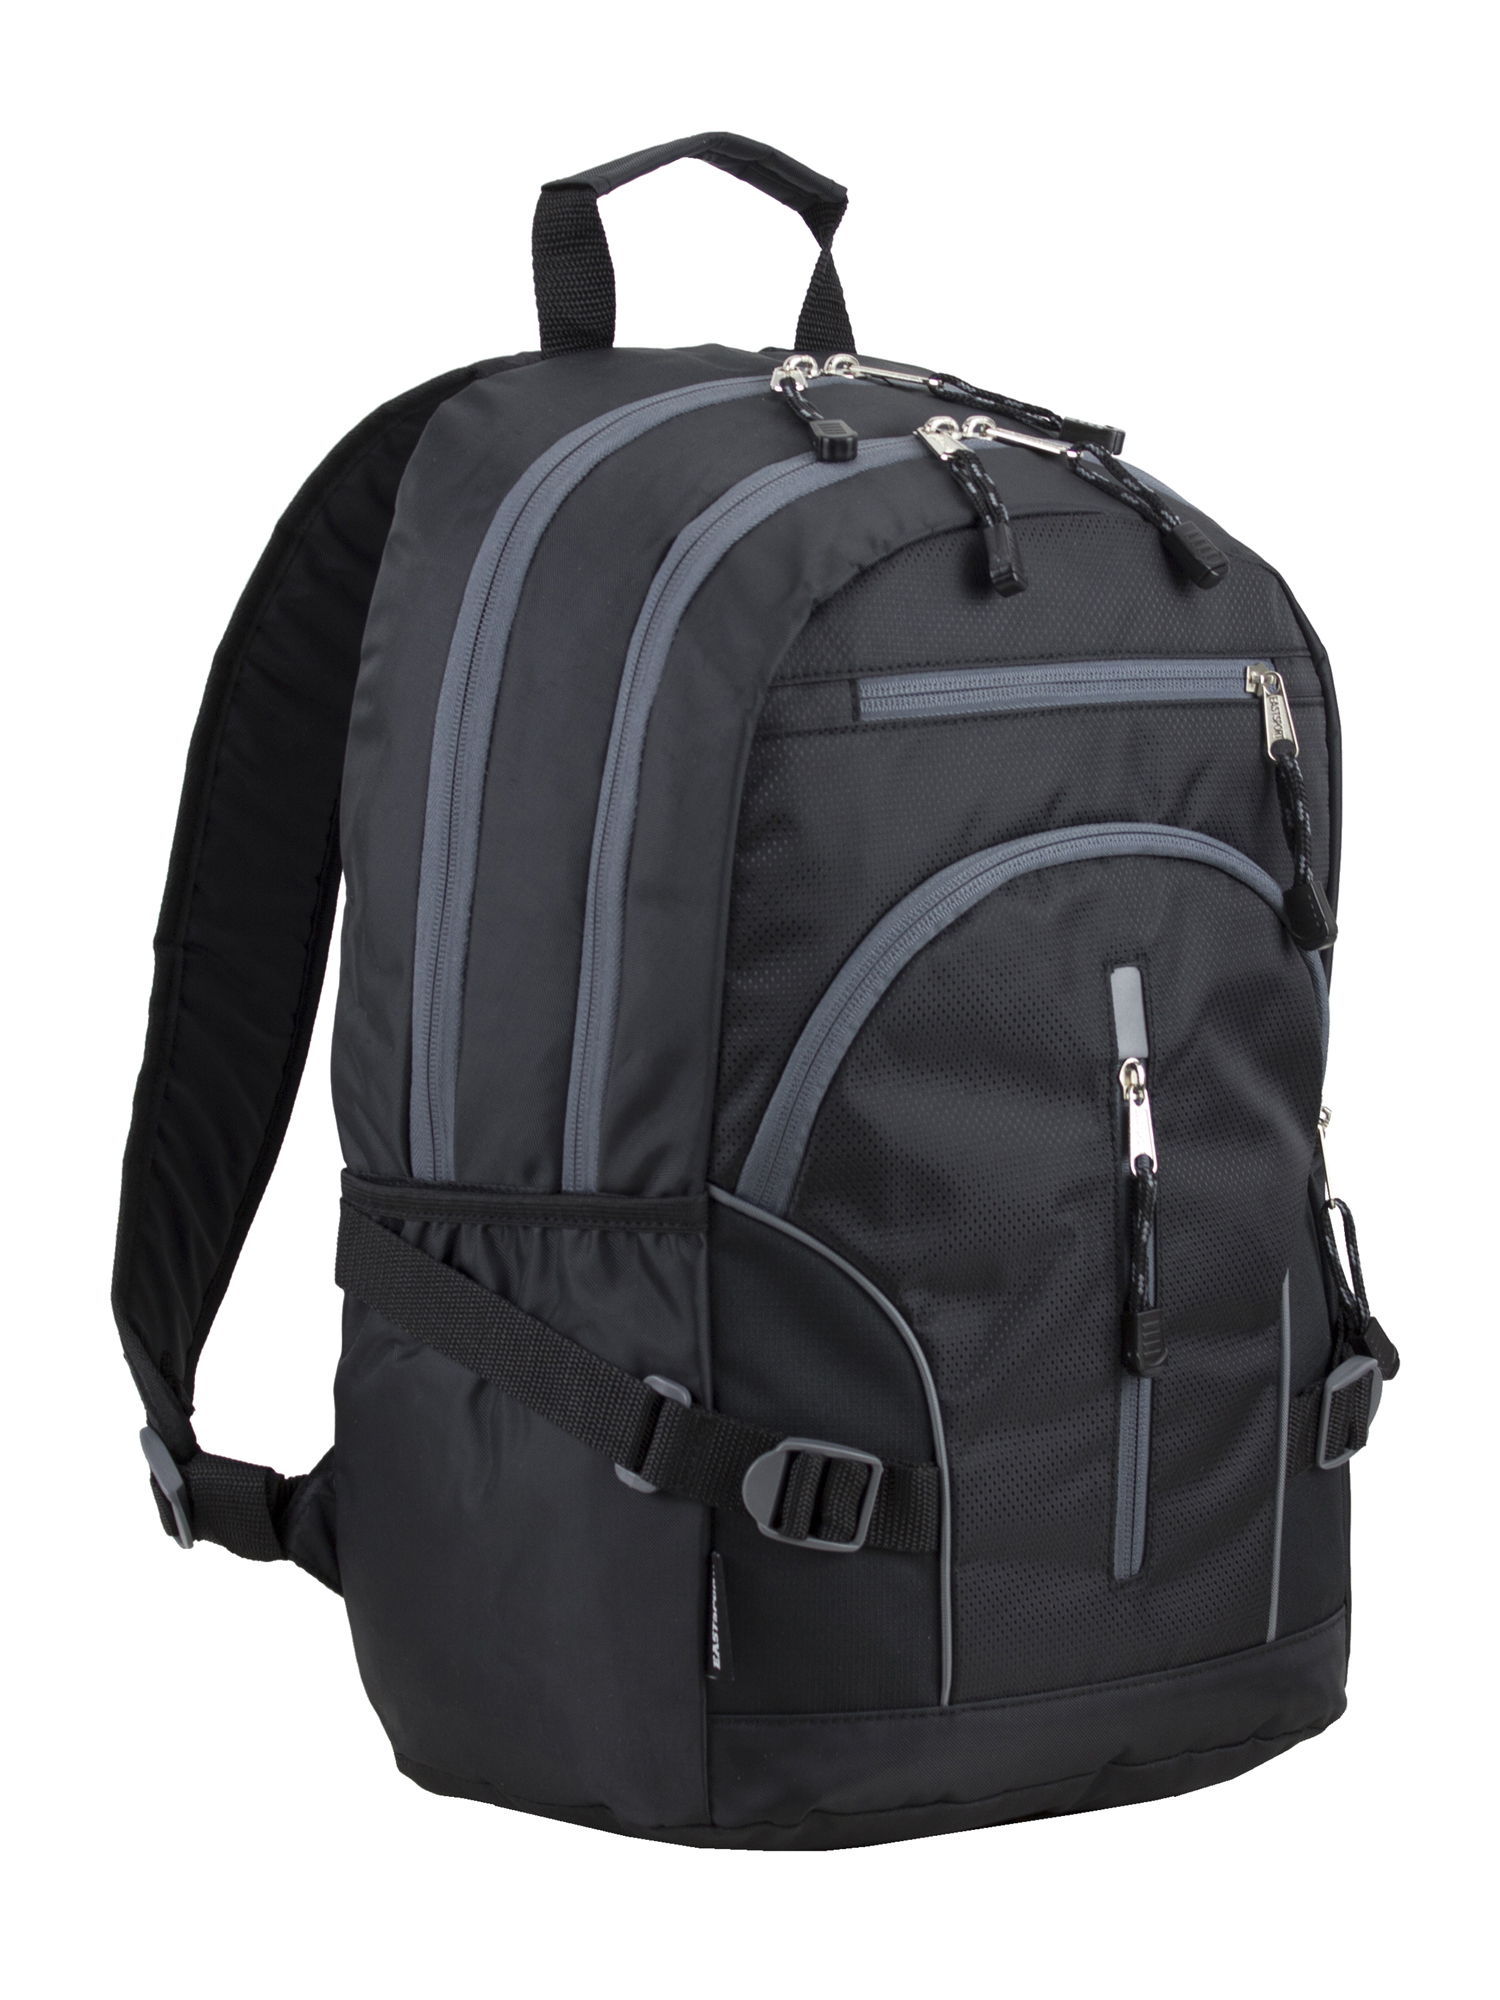 Eastsport Multi-Purpose Dynamic School Black Backpack - image 1 of 6